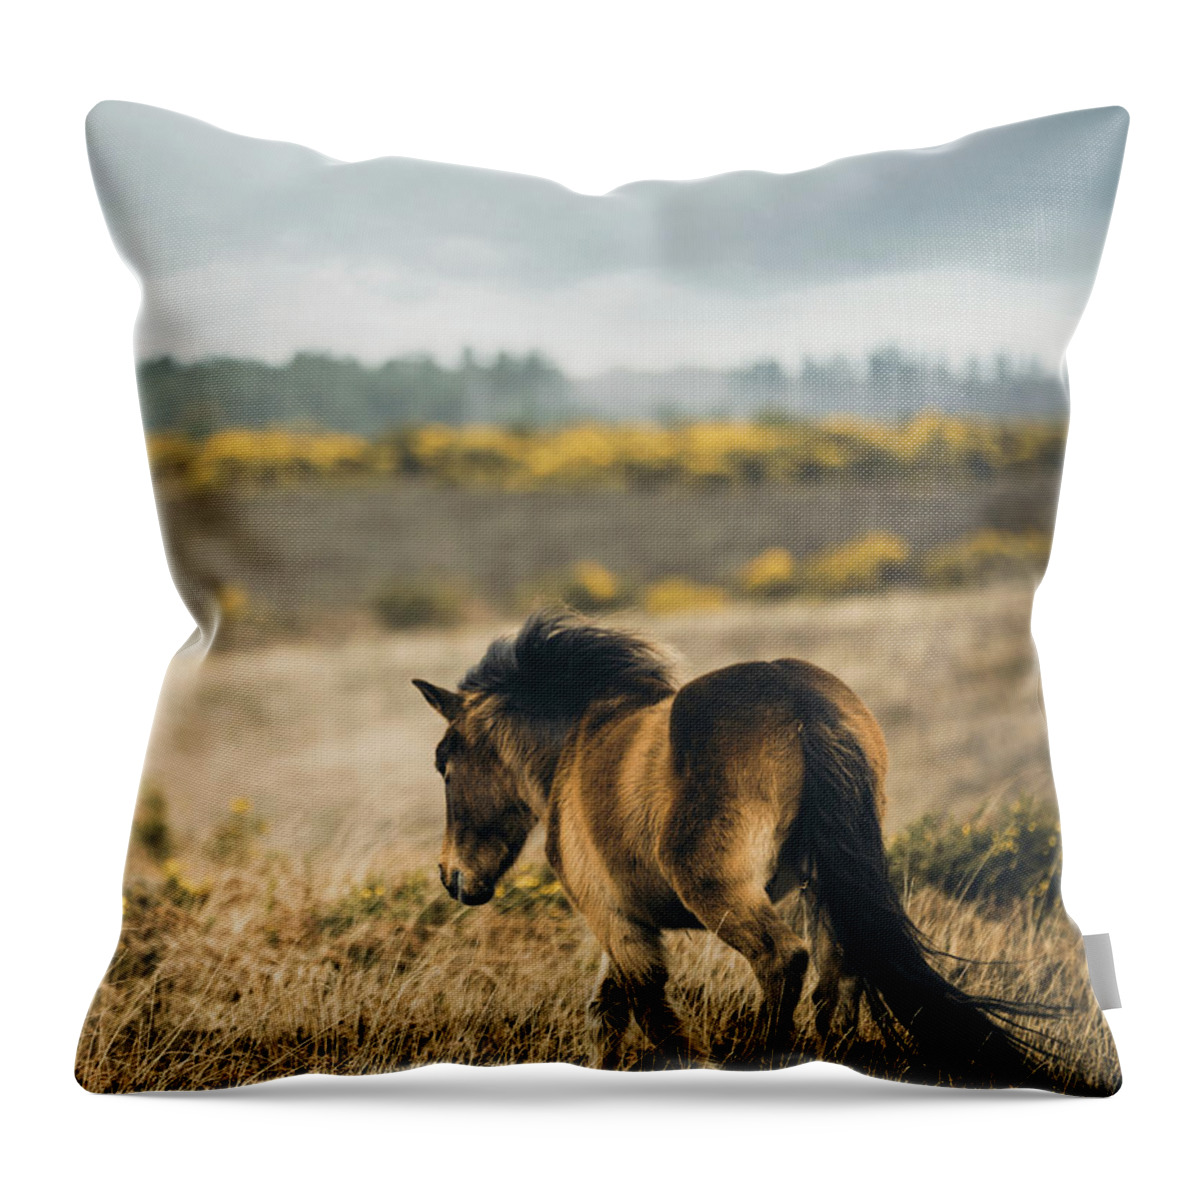 Photographs Throw Pillow featuring the photograph Wild - Horse Art by Lisa Saint